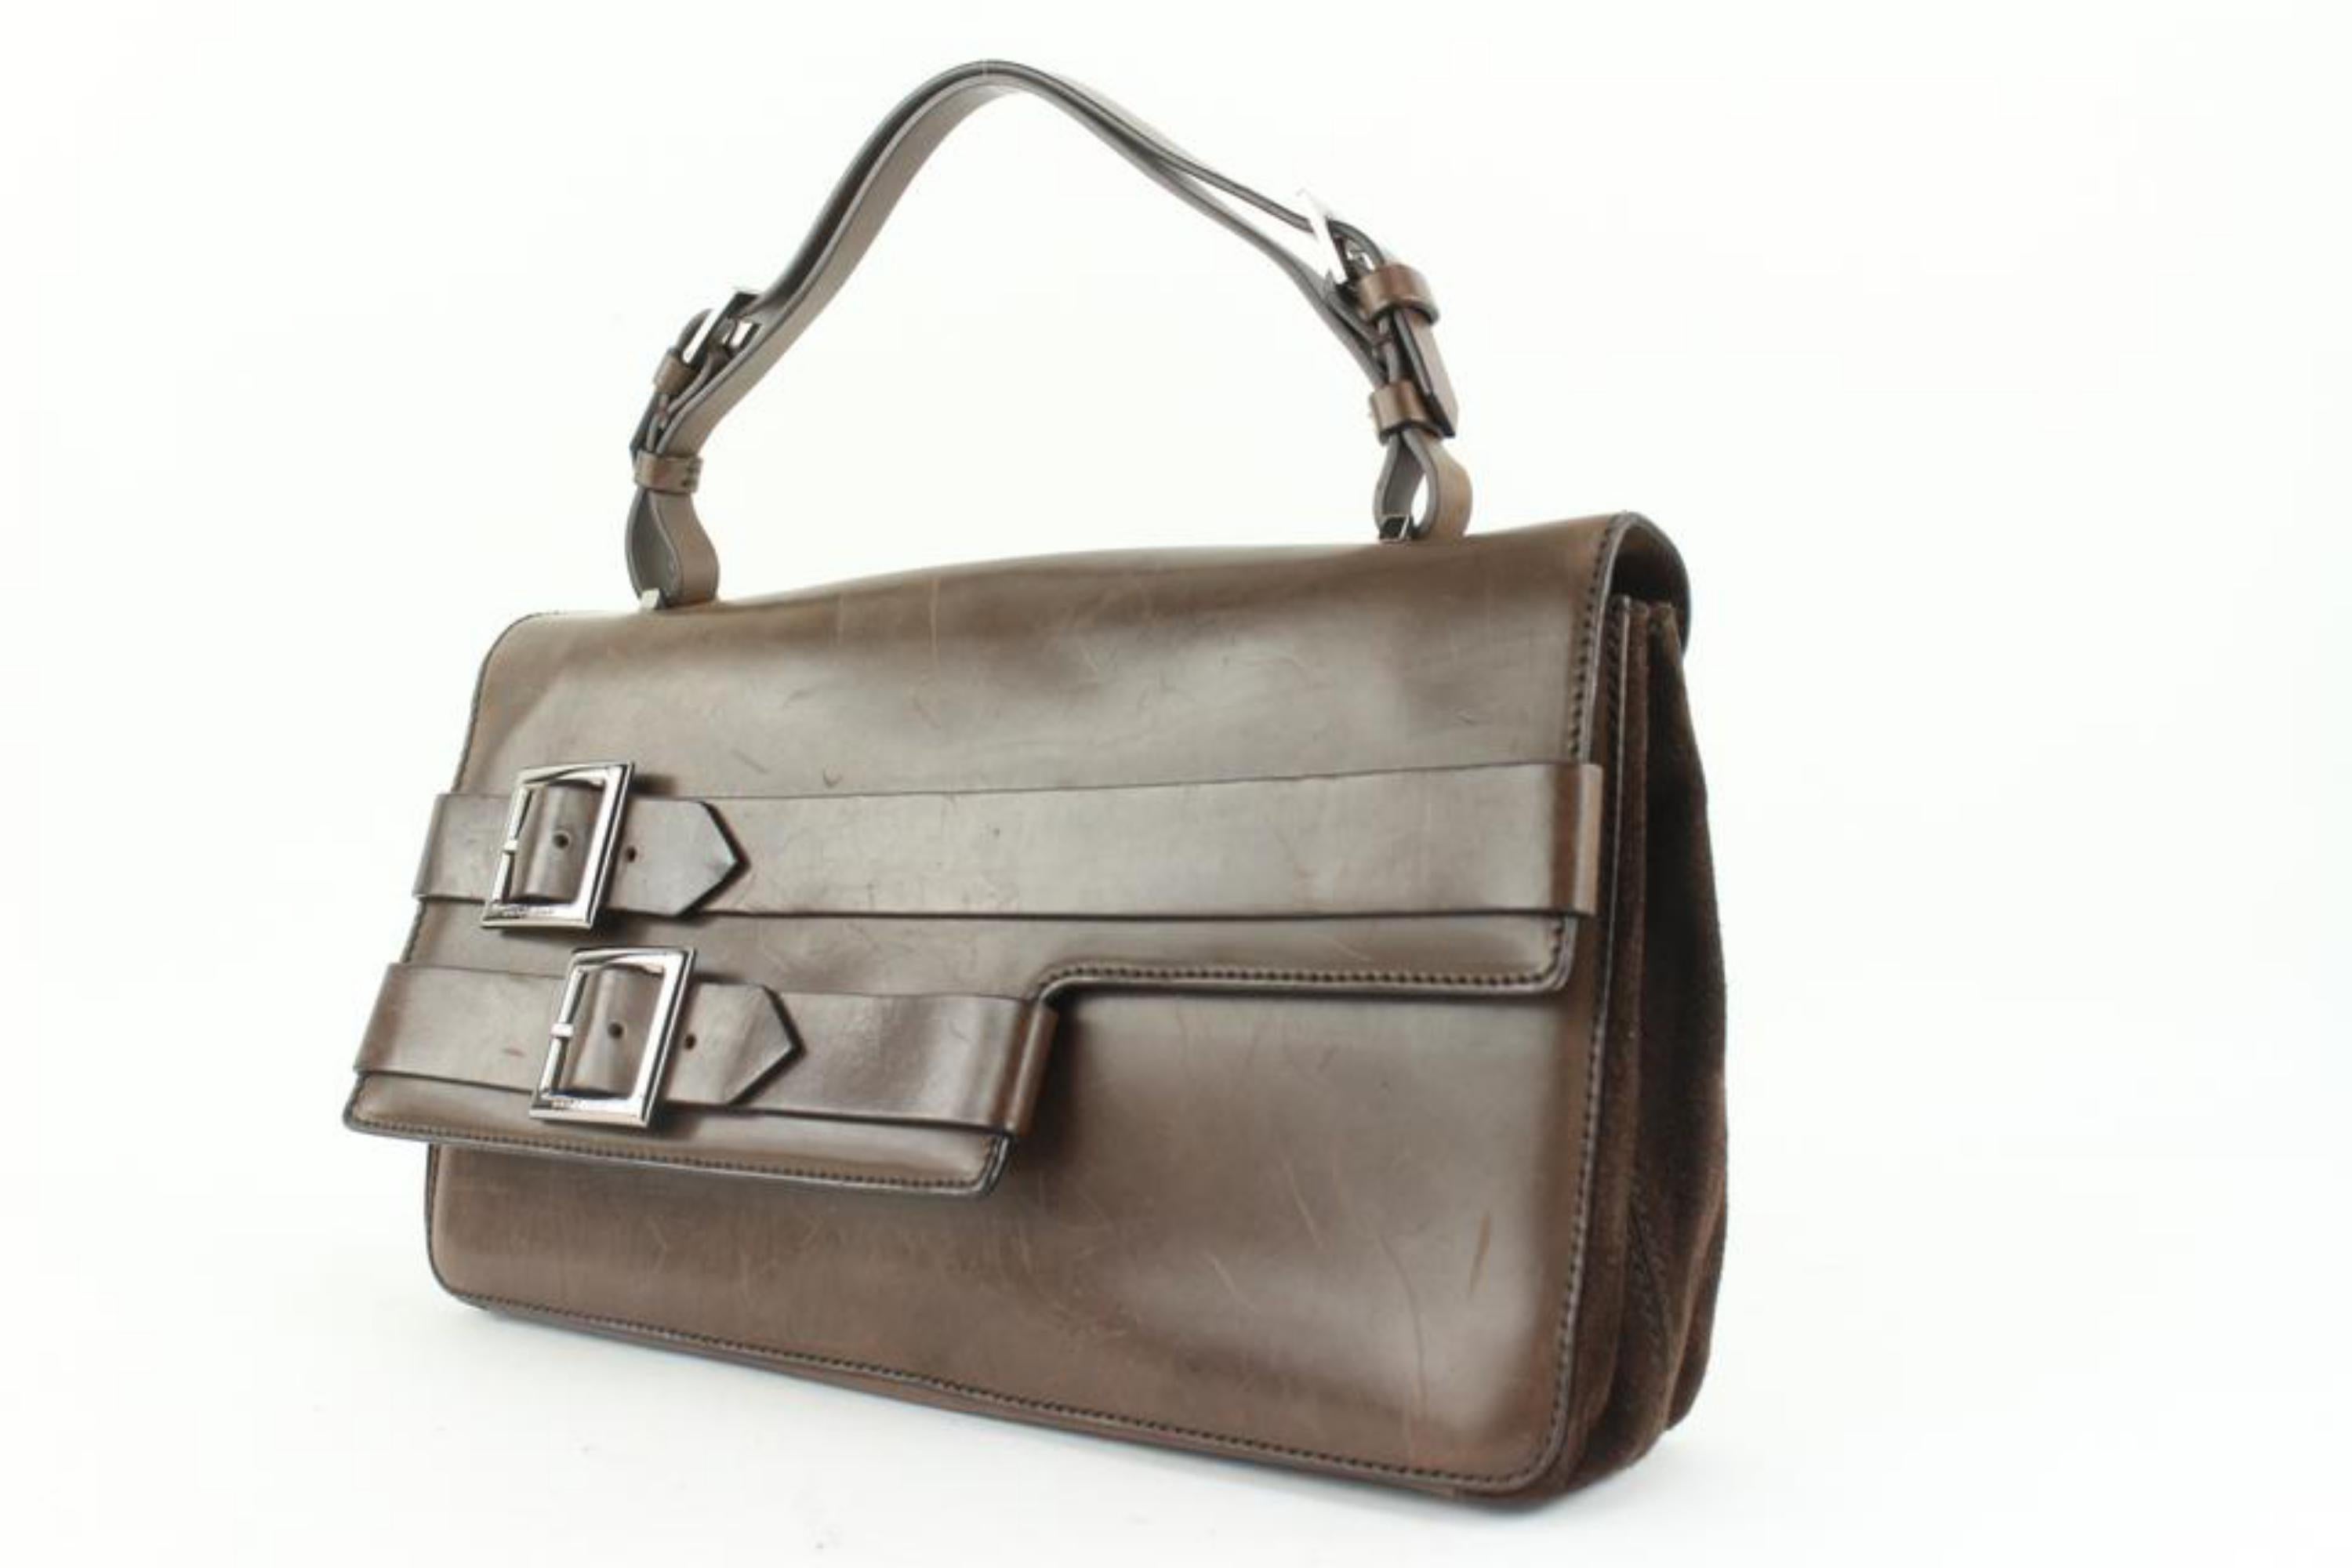 Dolce & Gabbana Brown Leather Belt Buckle Motif Top Handle Satchel Bag 4DG111
Made In: Italy
Measurements: Length: 13 